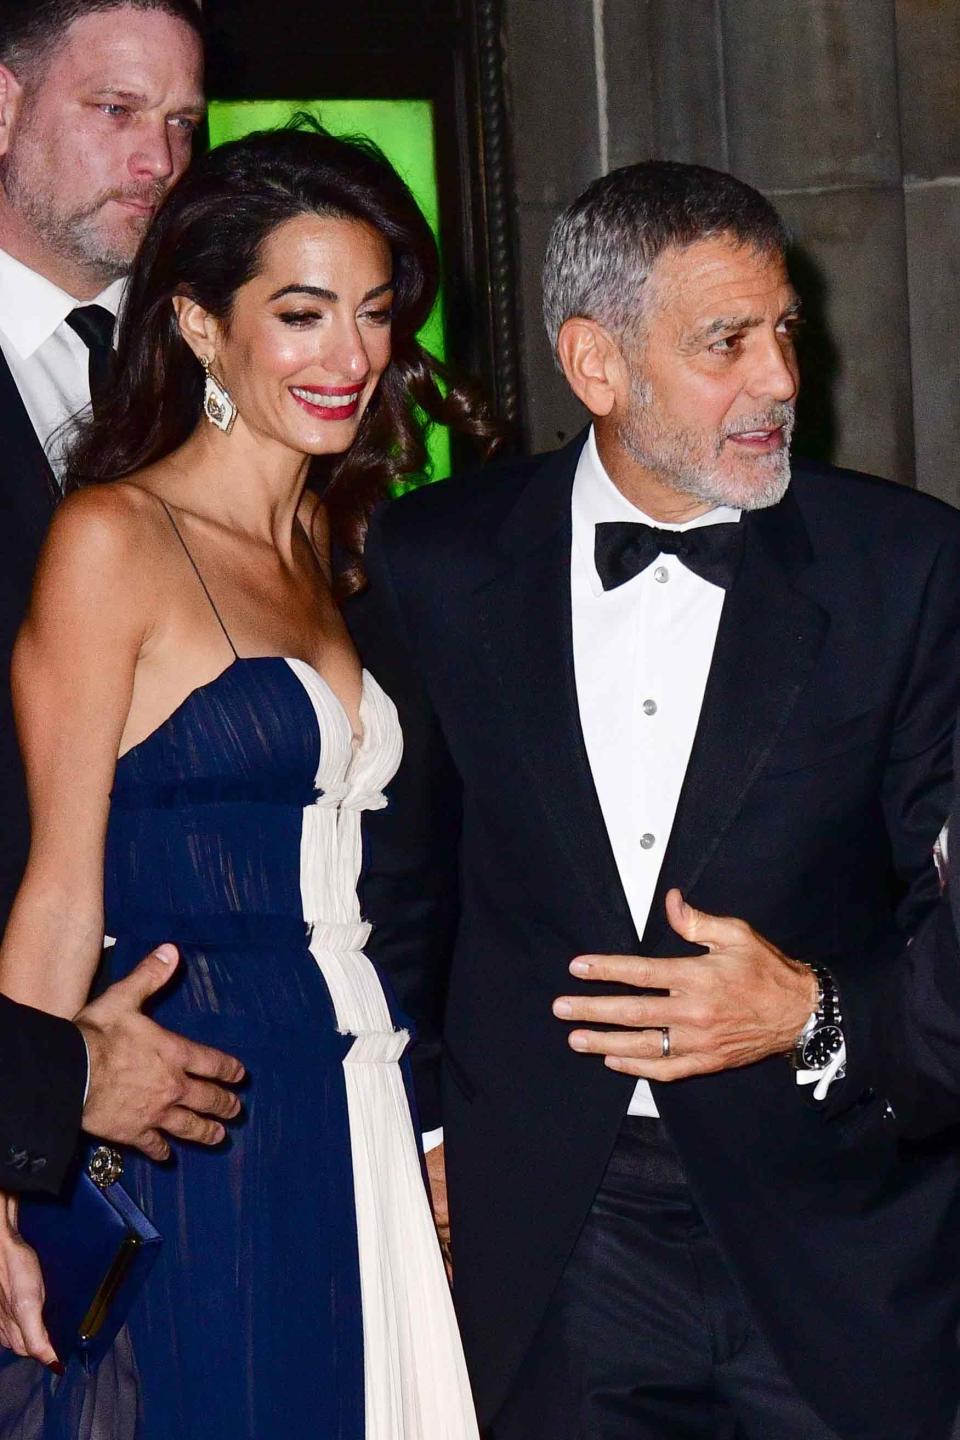 George Clooney’s Santa Claus Beard